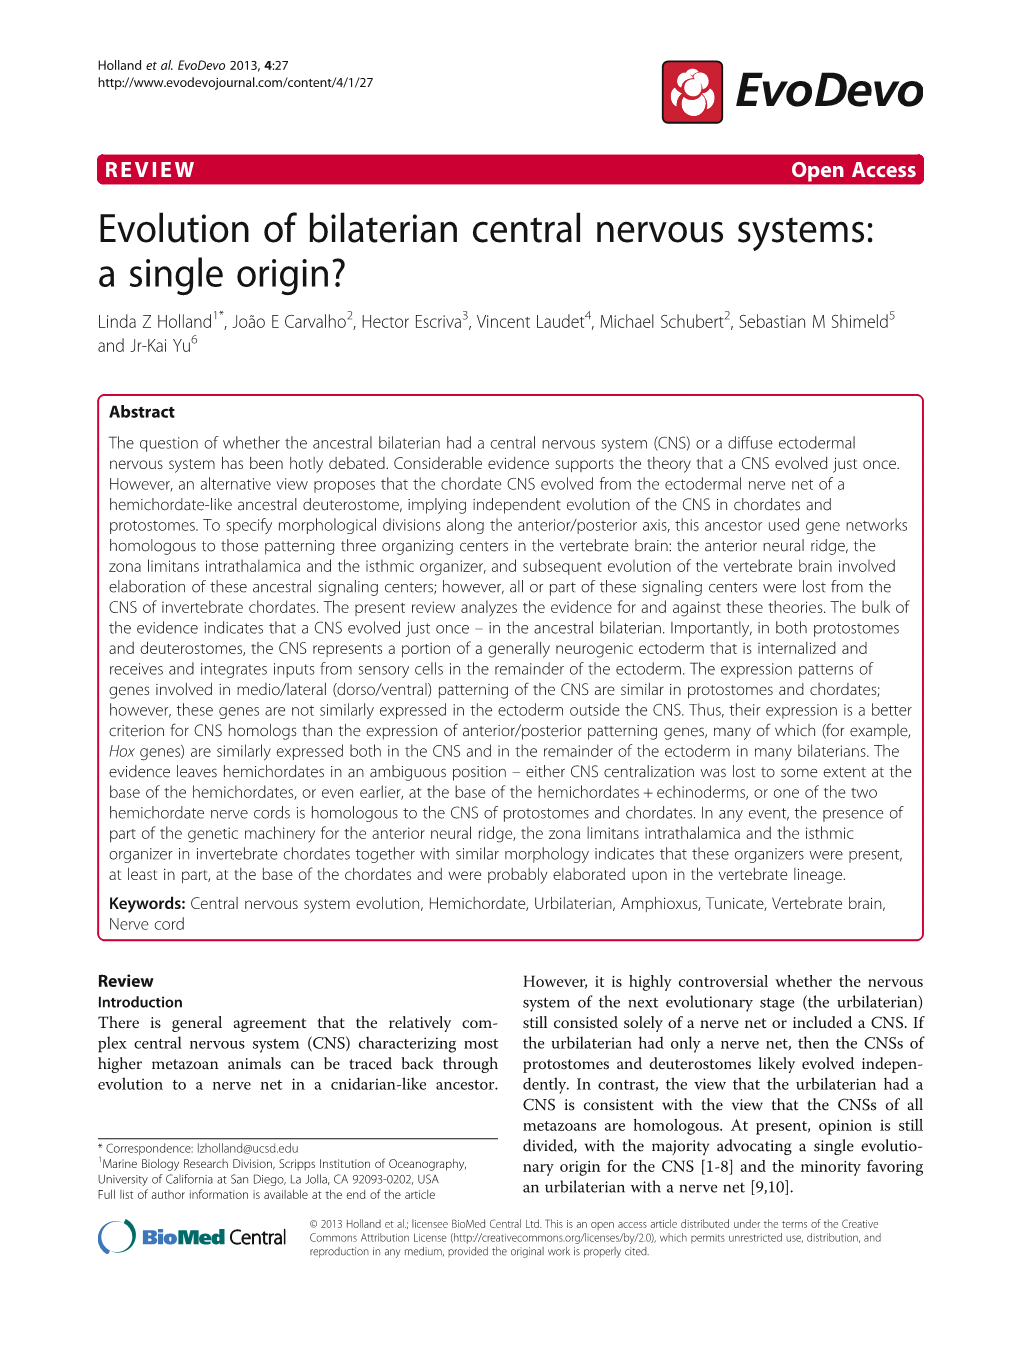 Evolution of Bilaterian Central Nervous Systems